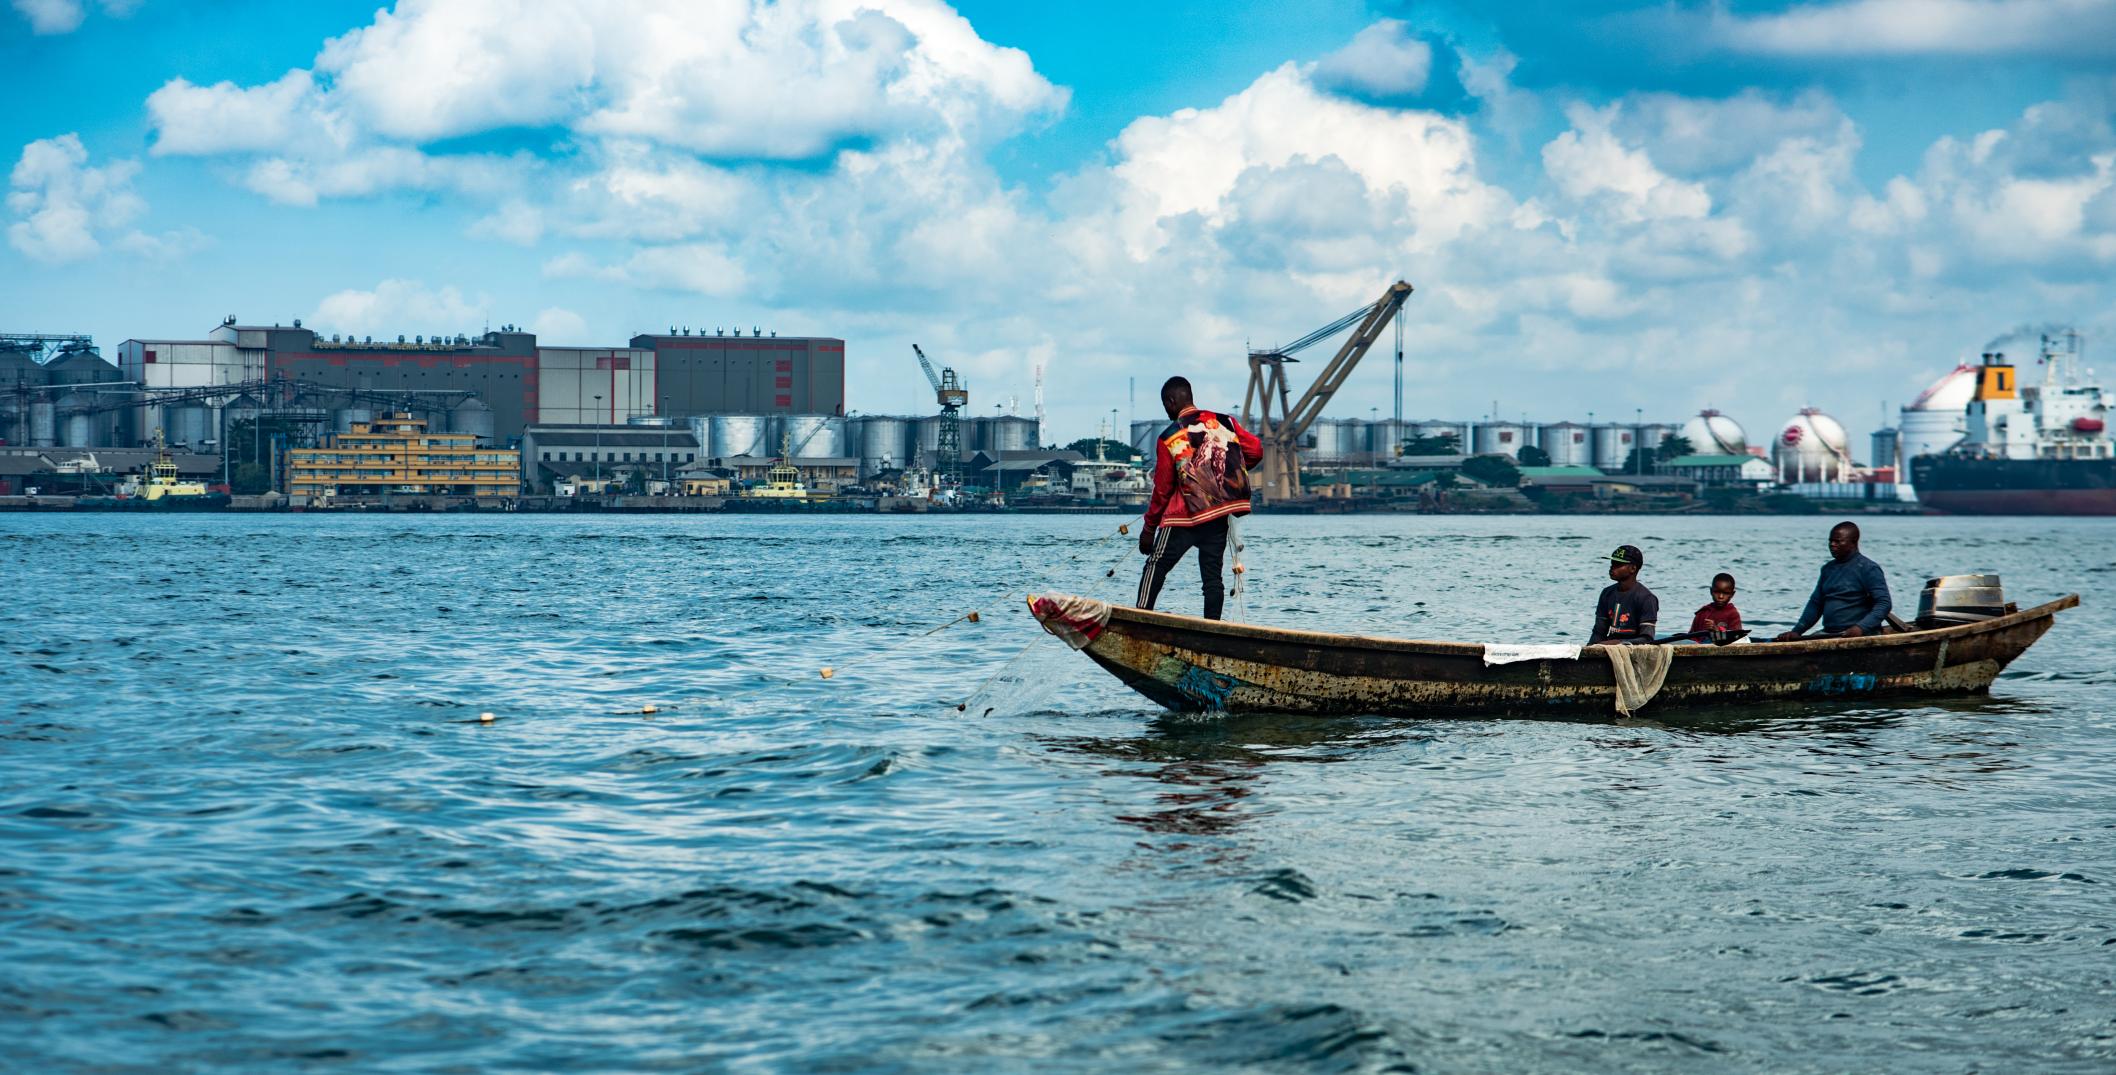 Men on a boat fishing along Lagos lagoon